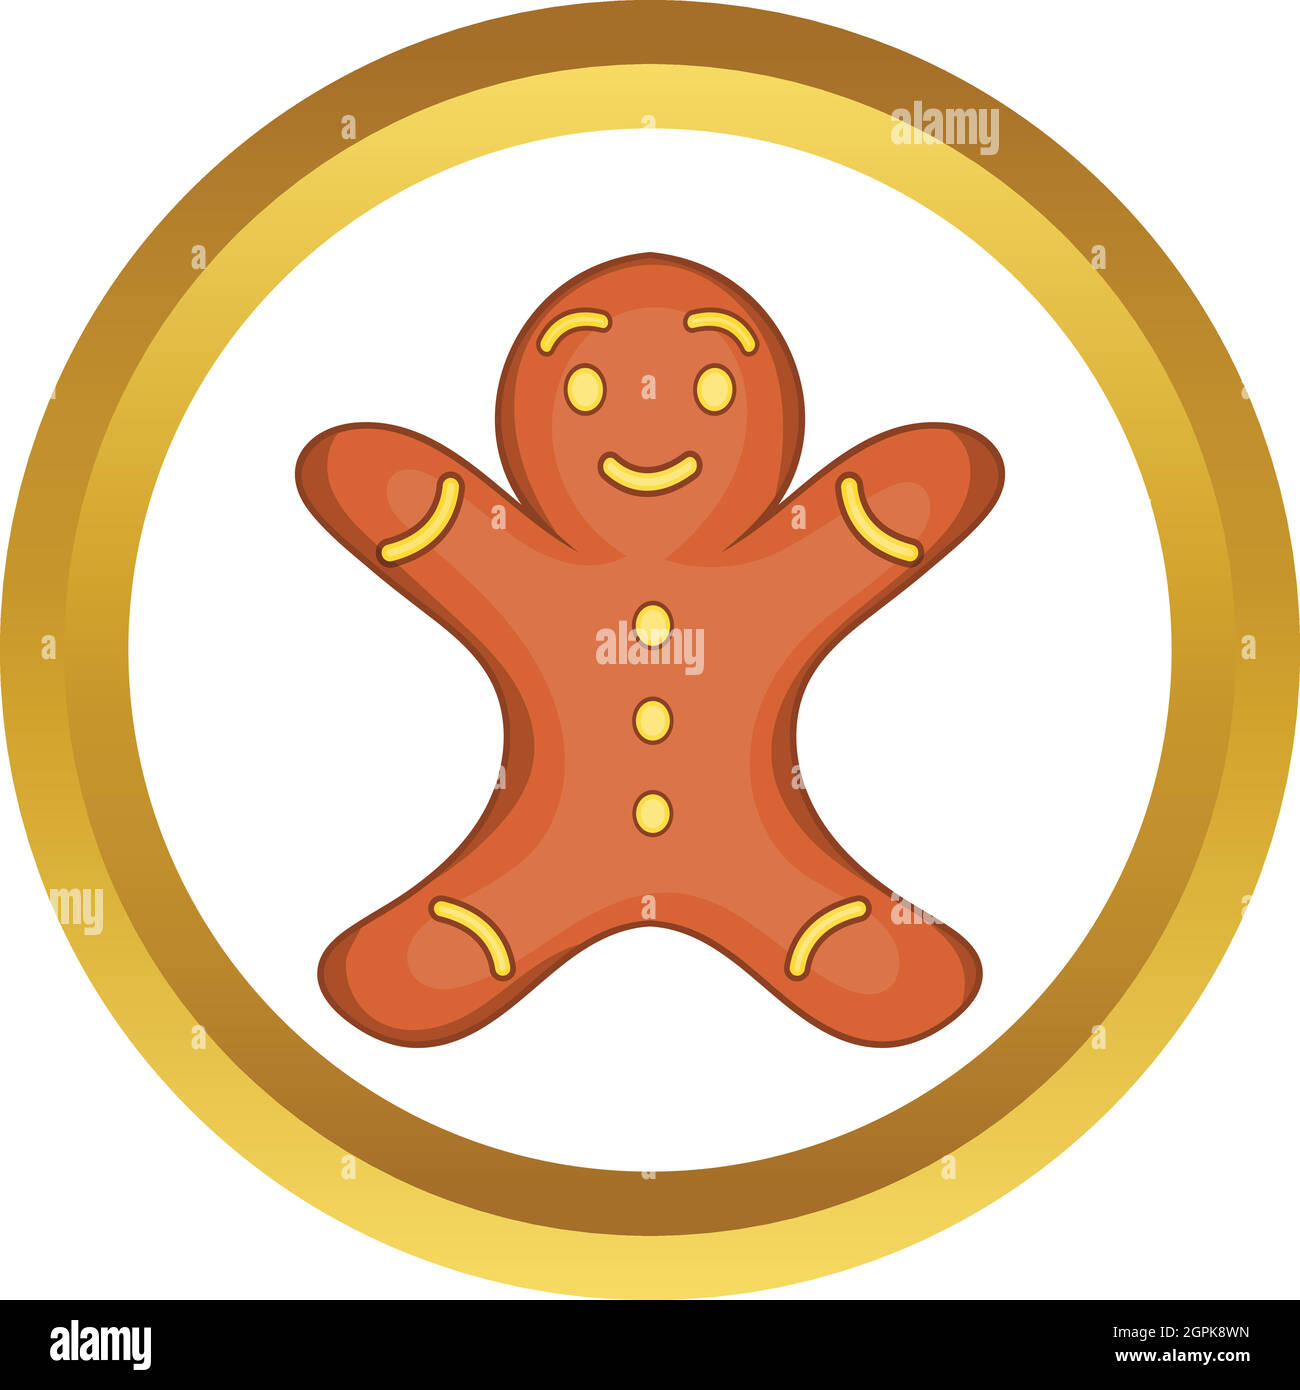 Gingerbread man cookie vector icon Stock Vector